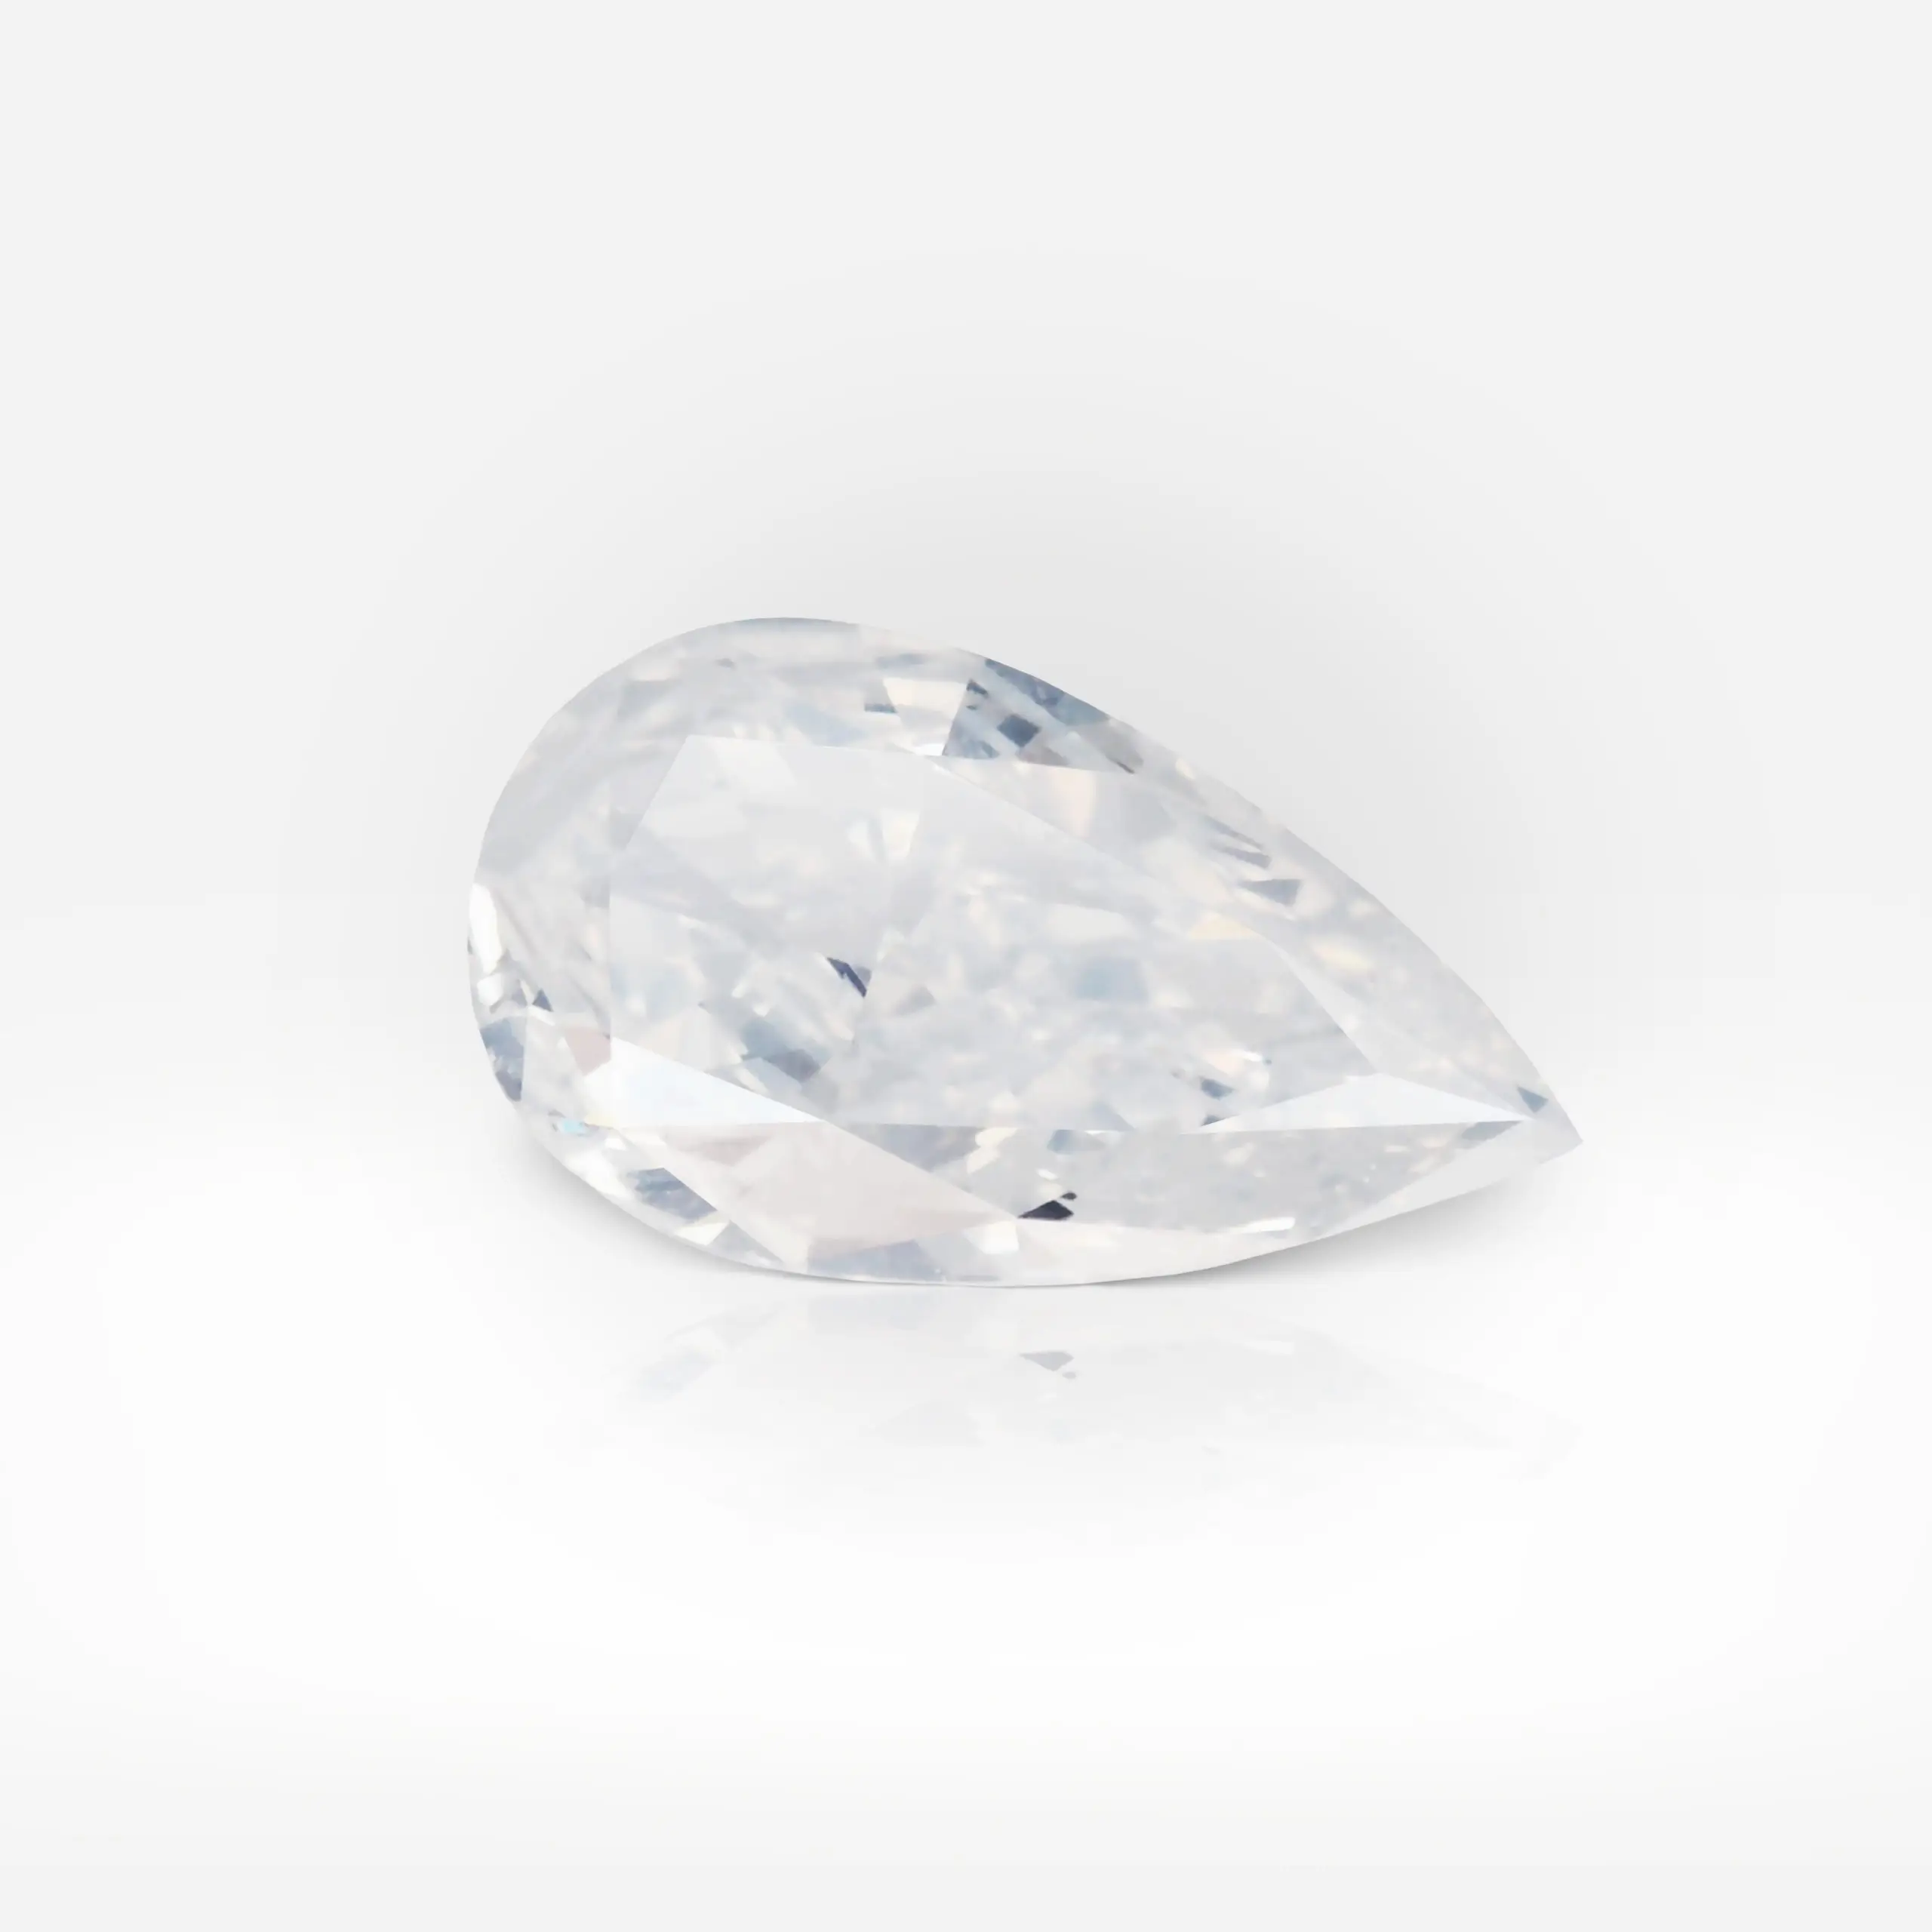 1.13 carat Fancy White I1 Pear Shape Diamond GIA - picture 1